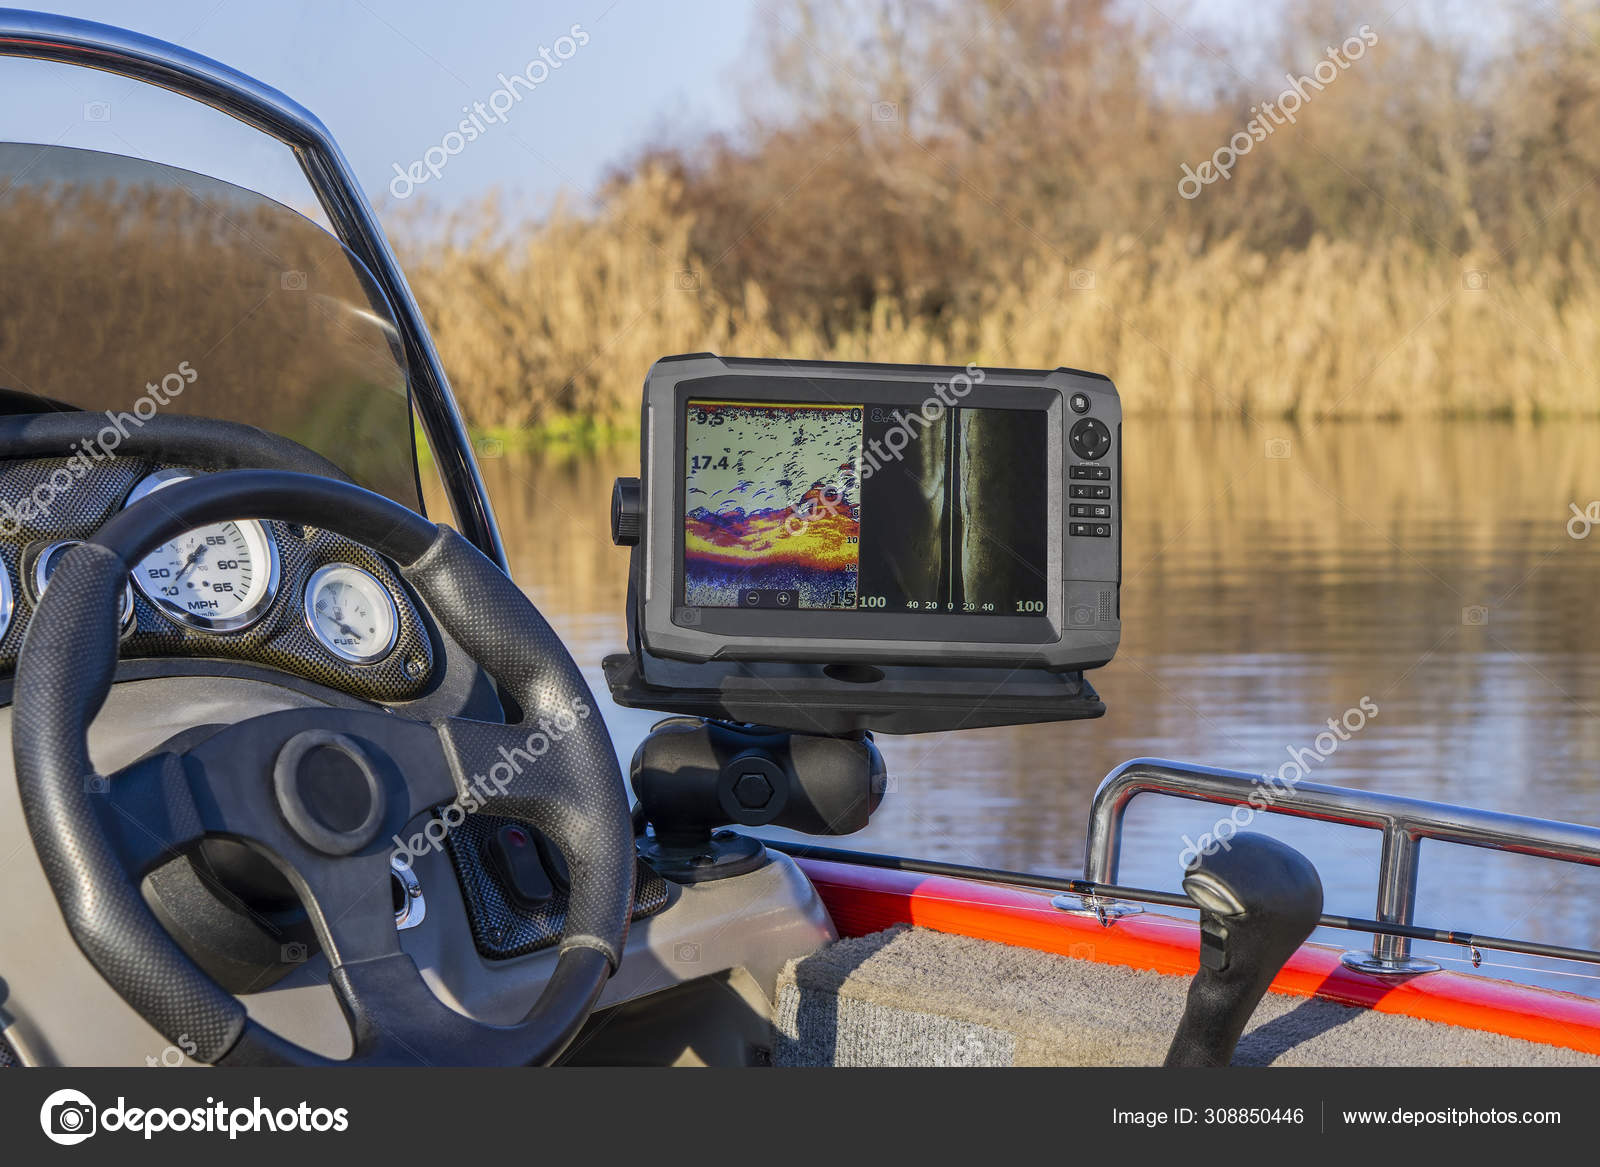 https://st4.depositphotos.com/17928540/30885/i/1600/depositphotos_308850446-stock-photo-fishing-boat-with-fish-finder.jpg